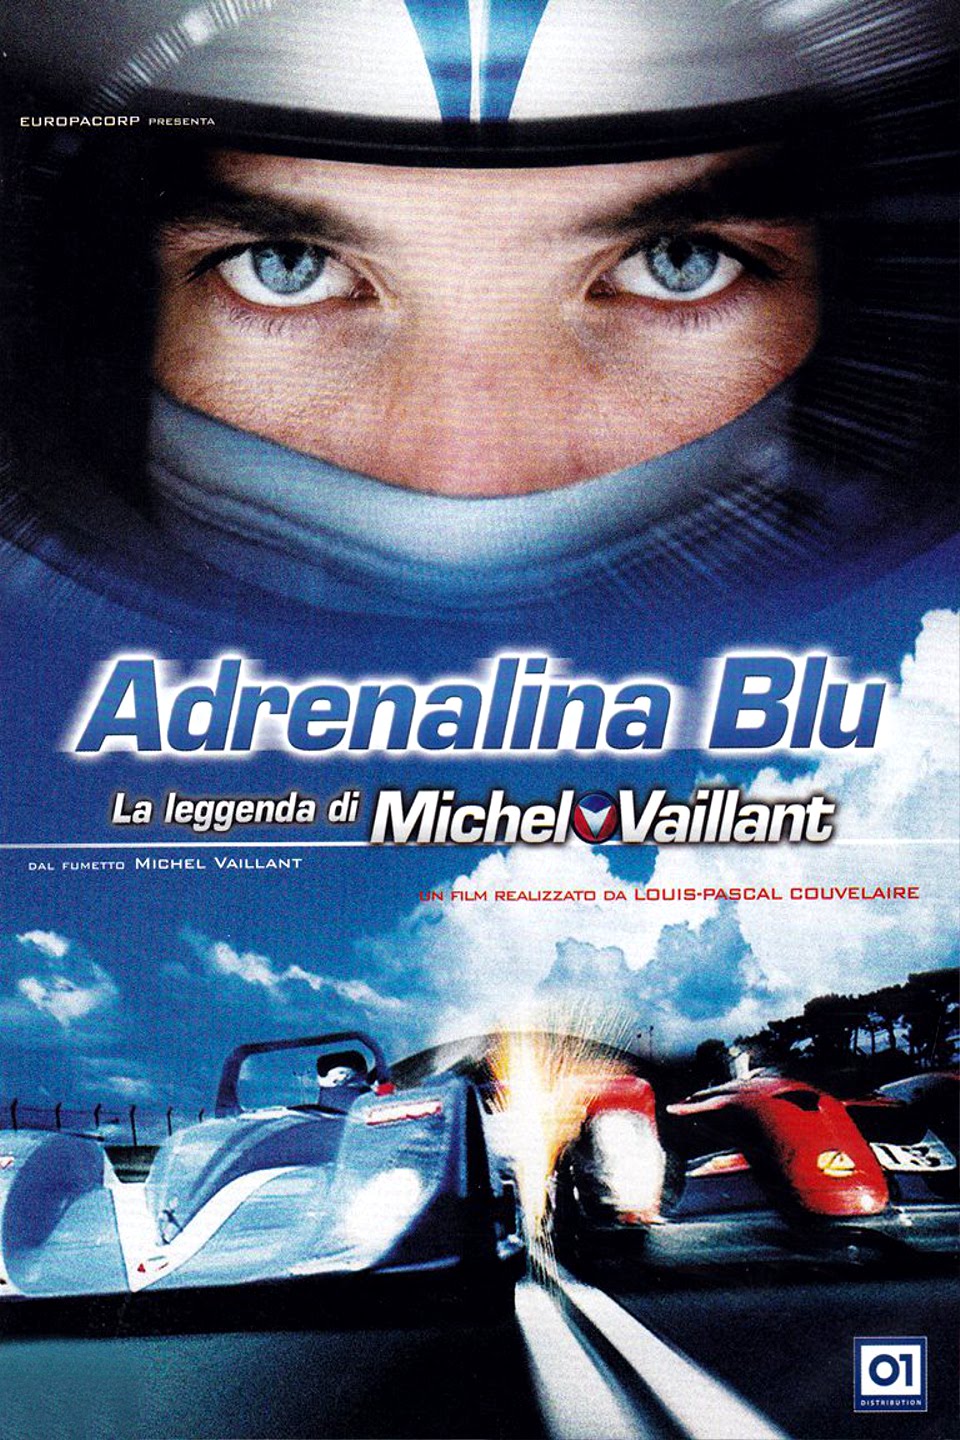 Adrenalina Blu – La leggenda di Michel Vaillant [HD] (2003)